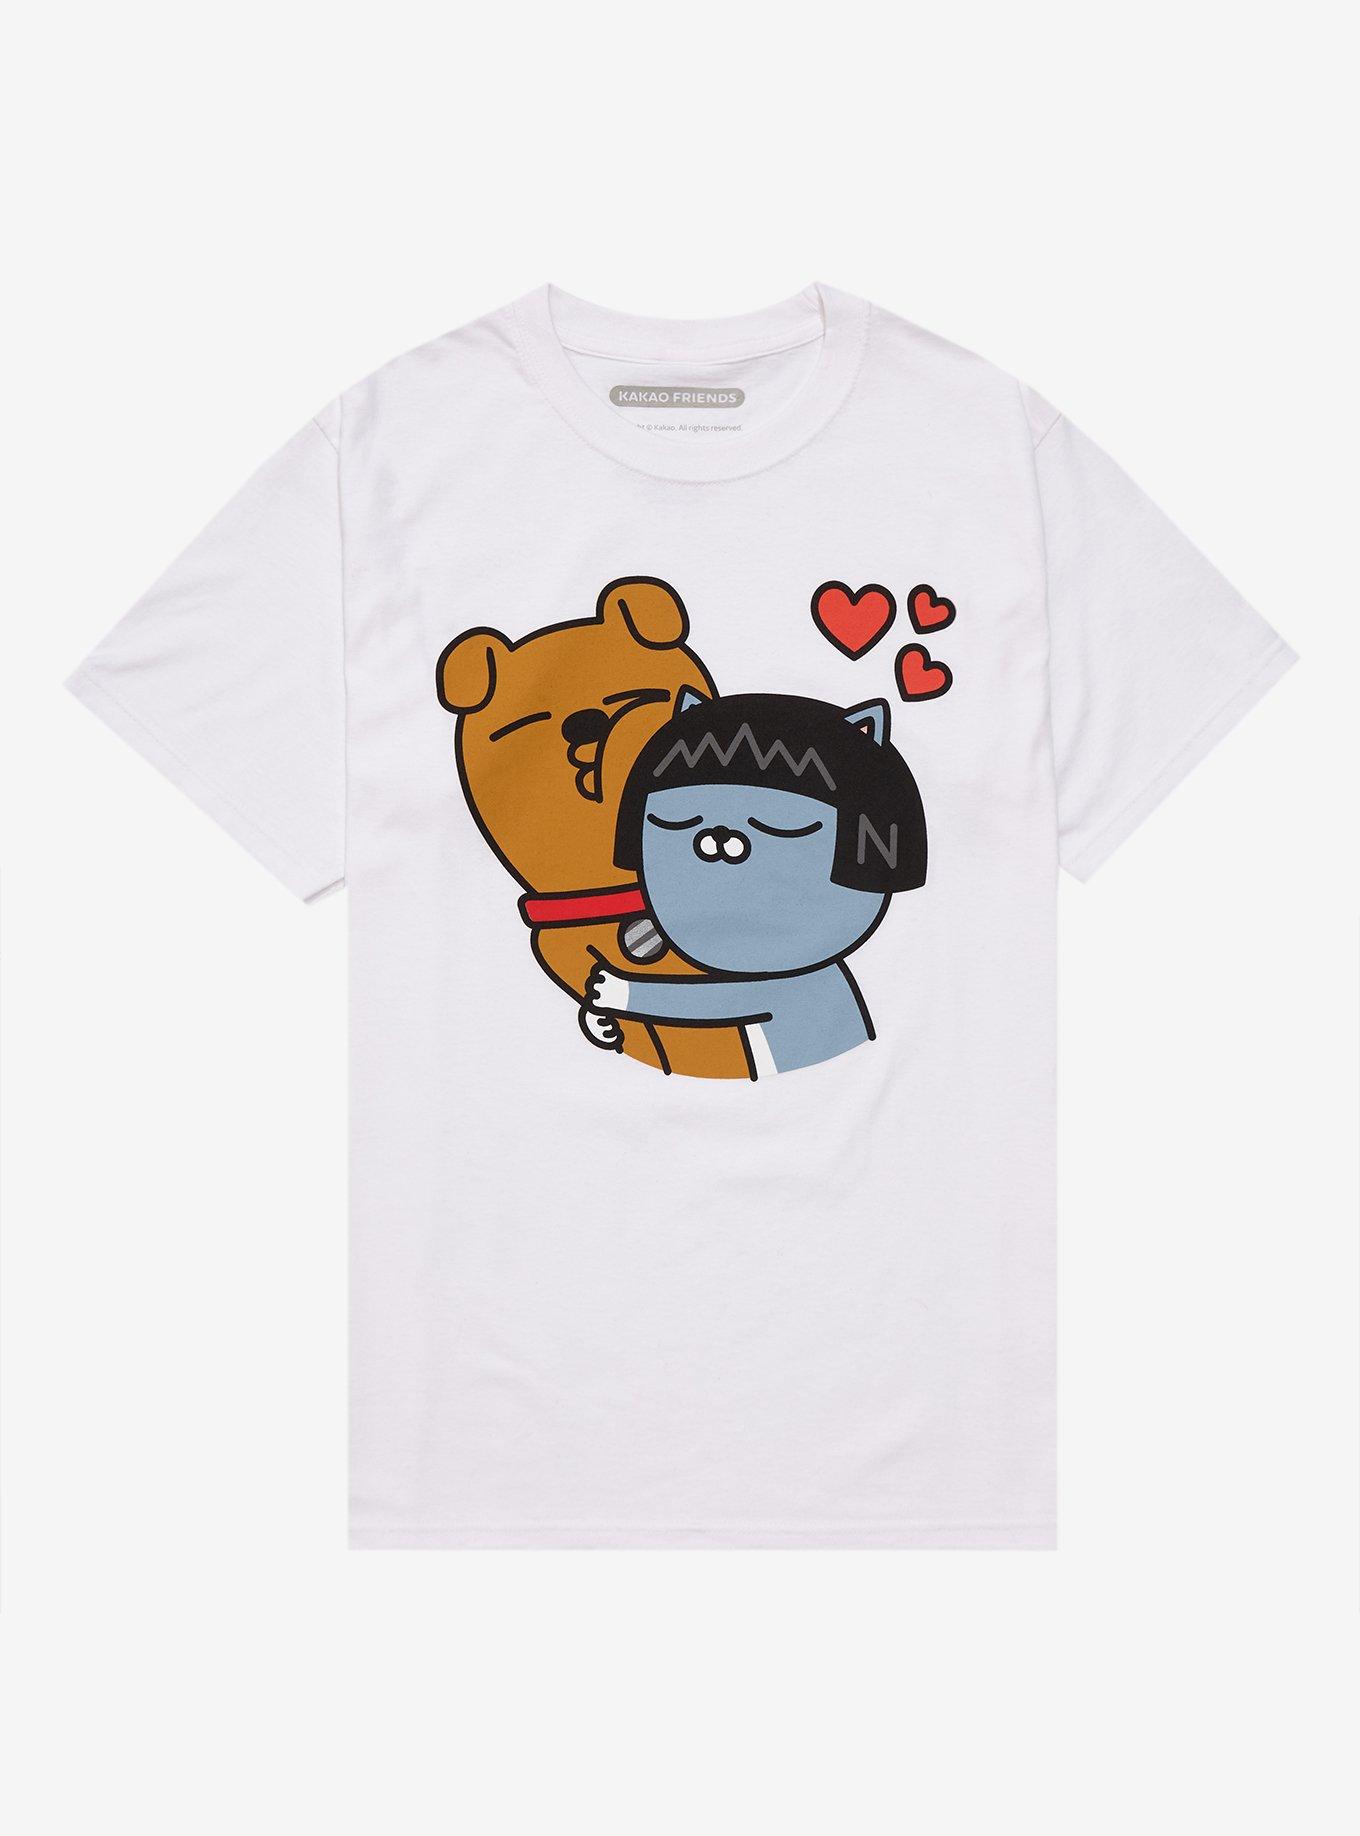 Kakao Friends Frodo & Neo Hug T-Shirt | Hot Topic